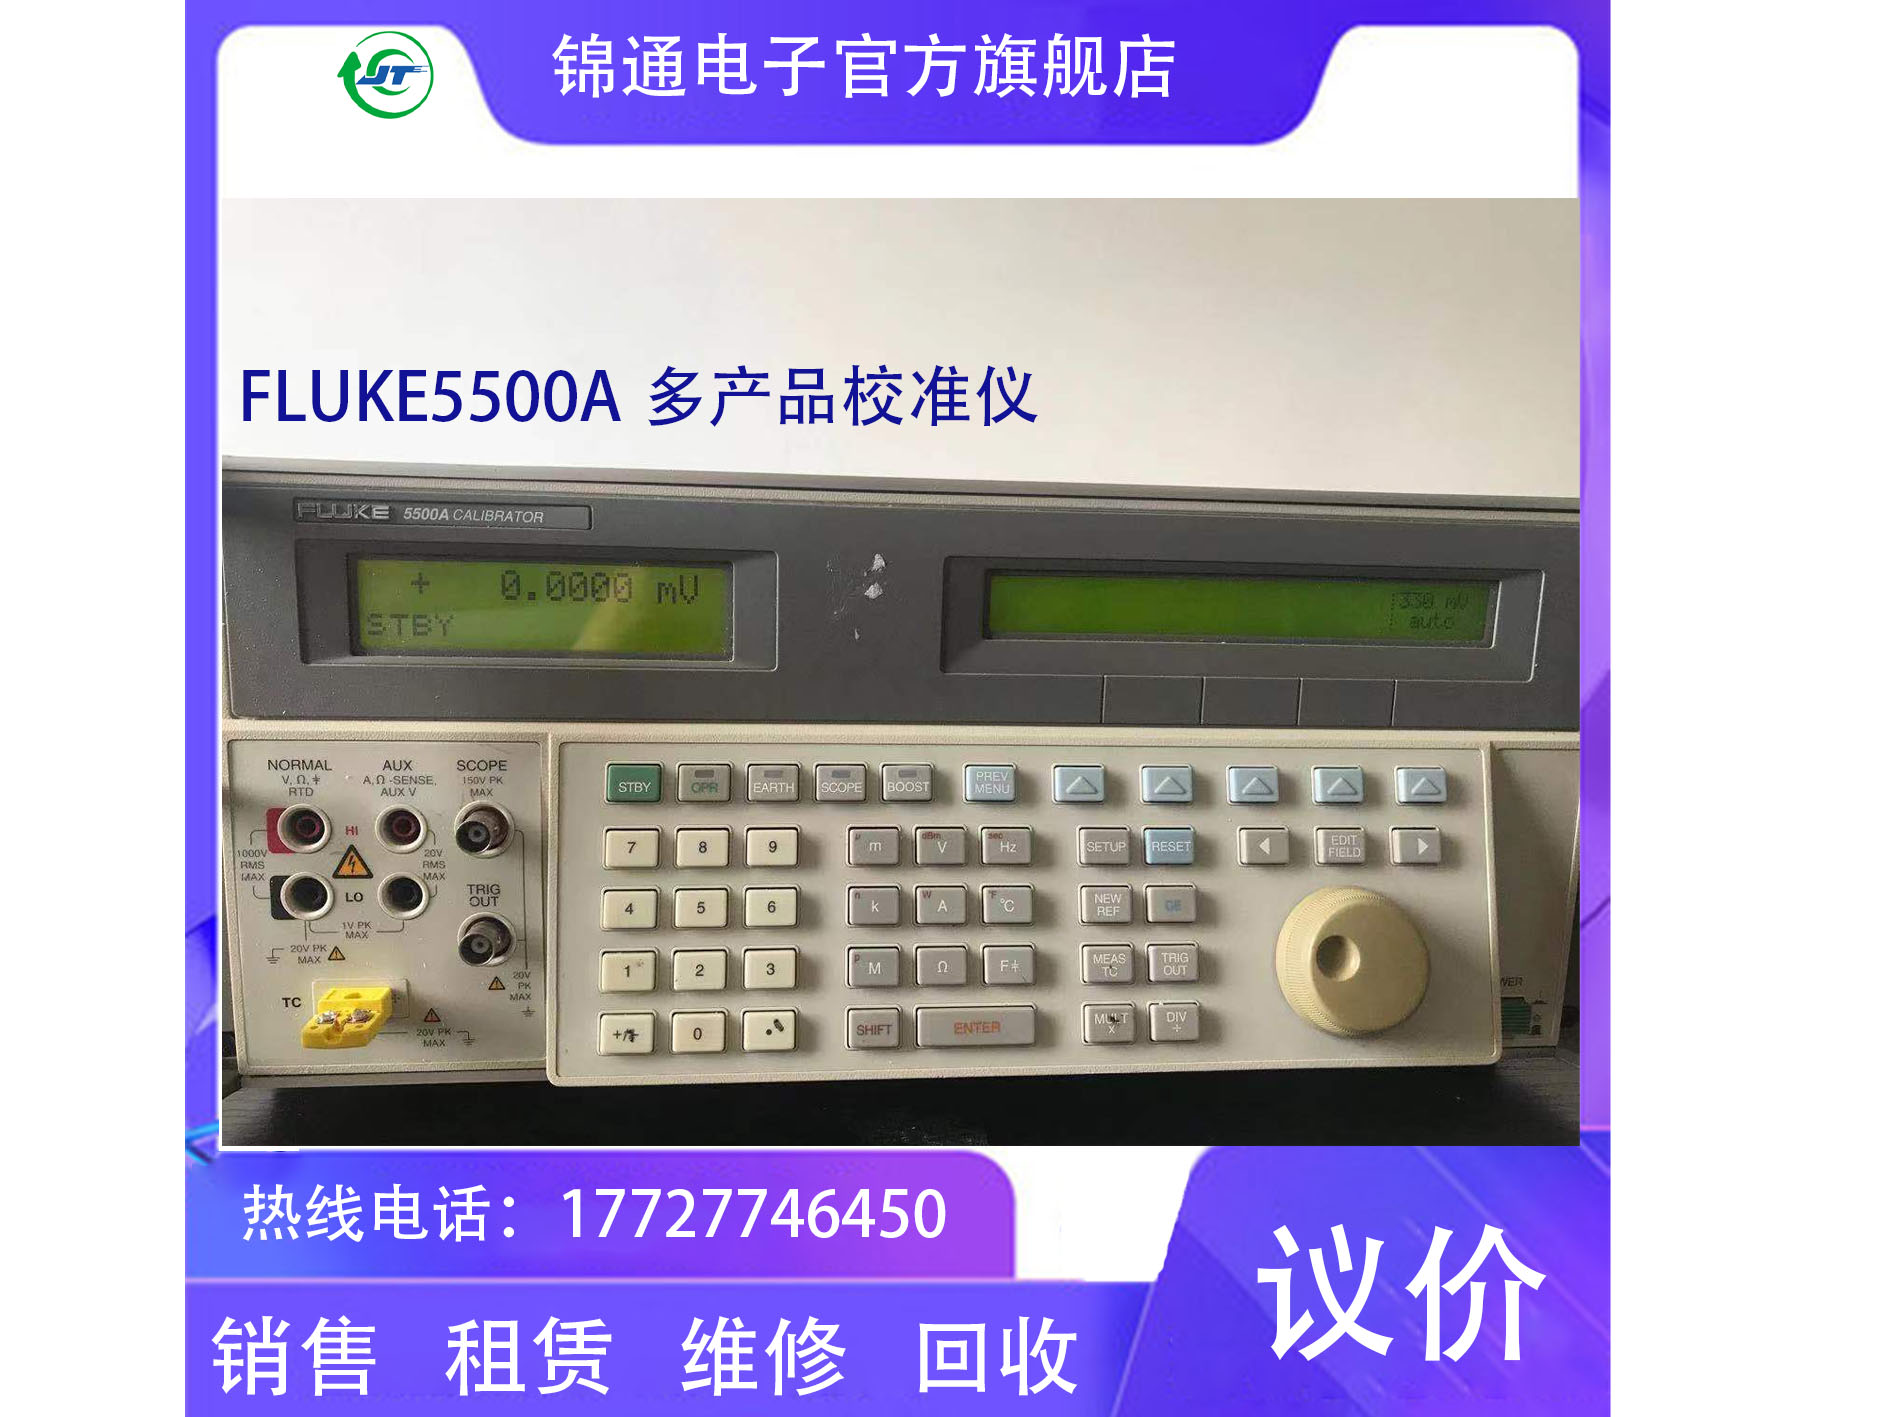 Fluke5500A 福禄克5500A 校准器